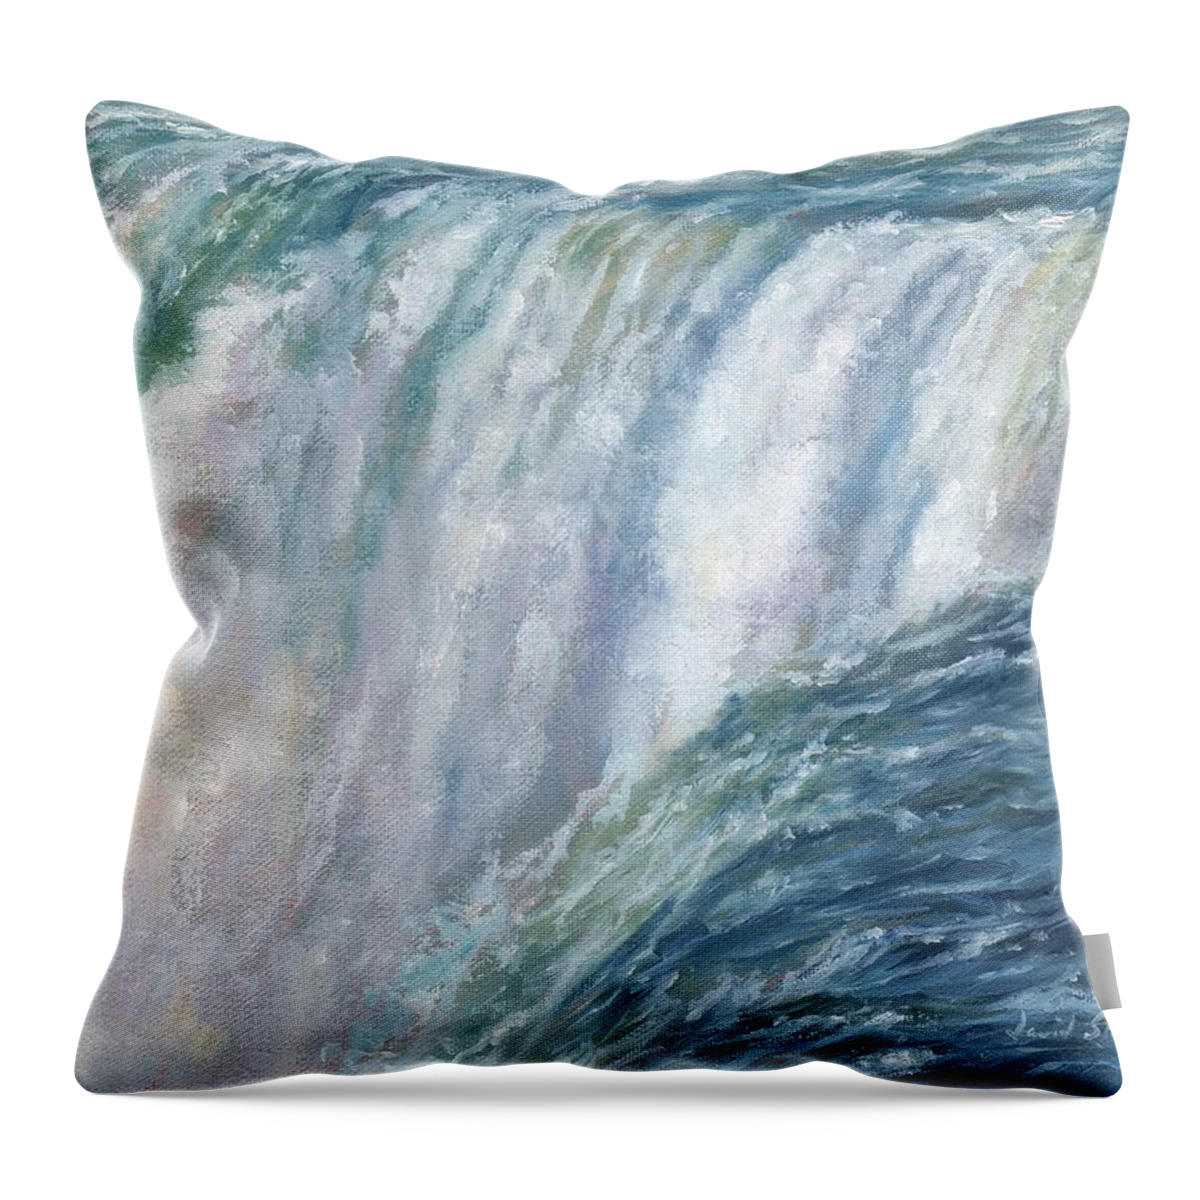 Niagara Throw Pillow featuring the painting Niagara Falls by David Stribbling